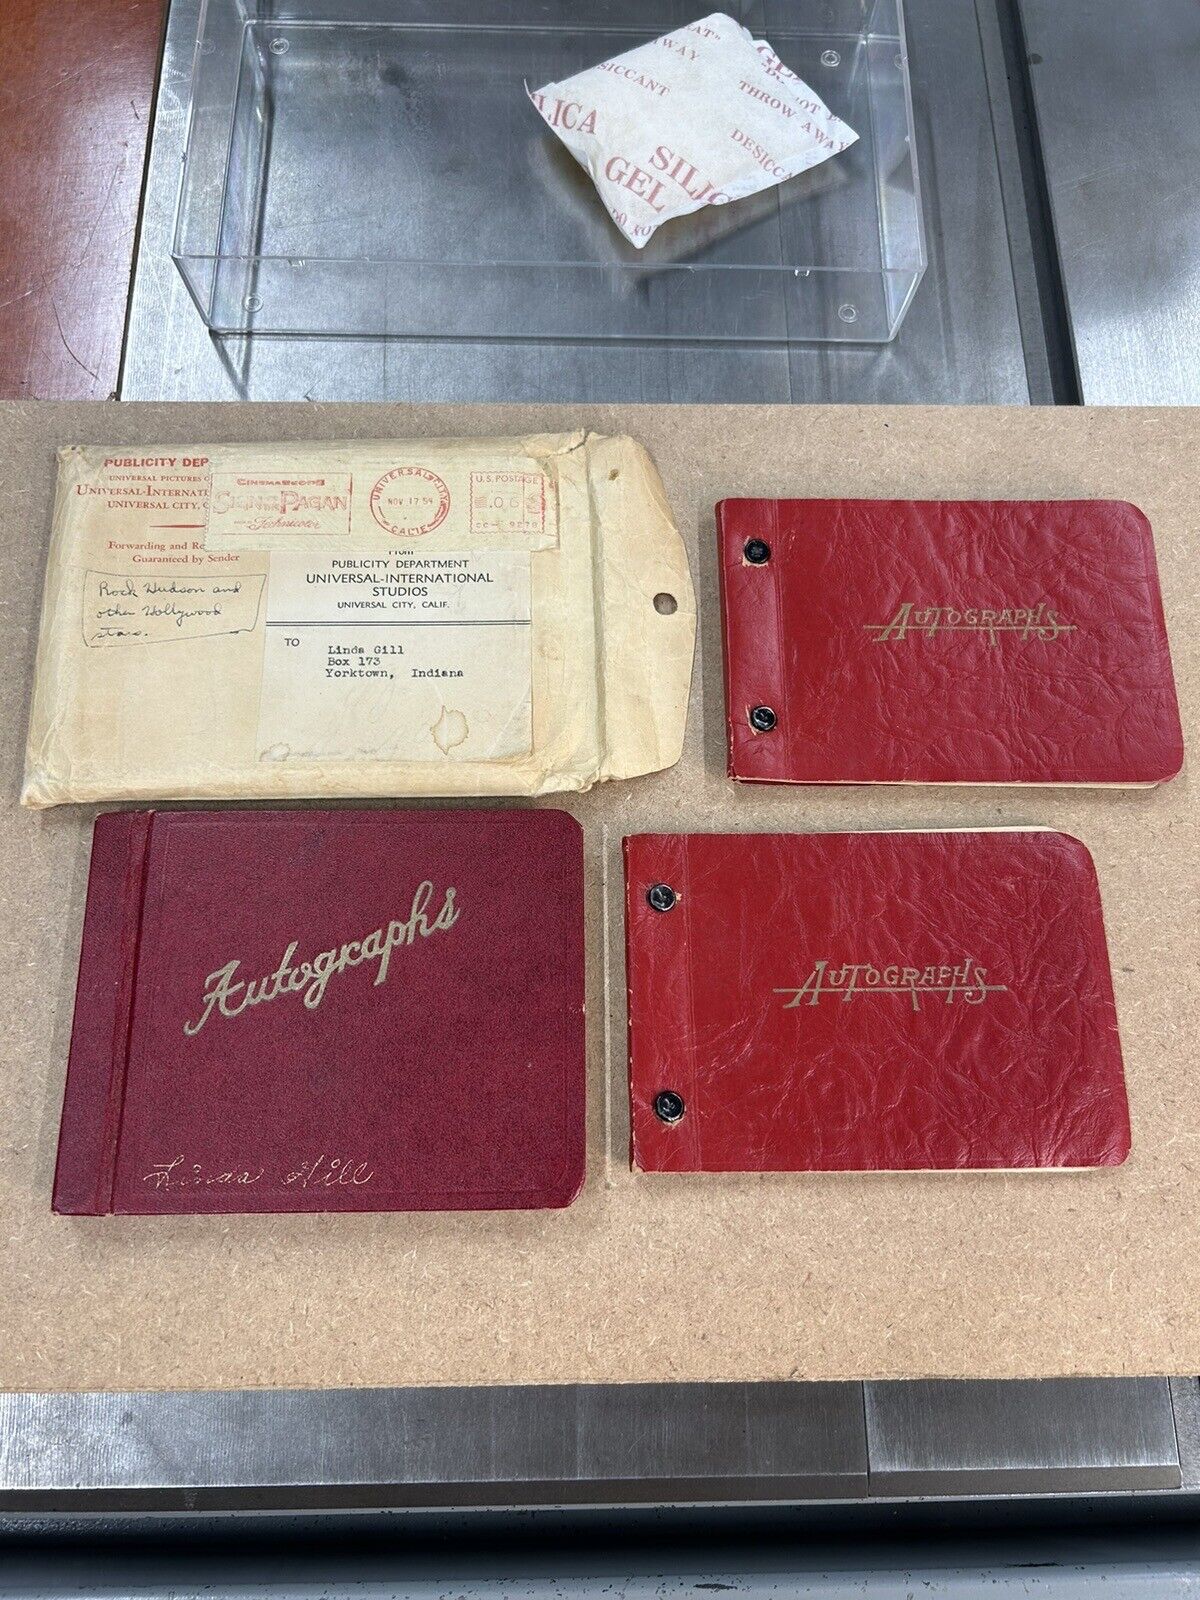 HOLLYWOOD AUTOGRAPH BOOKS 1954 MARILYN MONROE, JIMMY STEWART, ROCK HUDSON + MORE